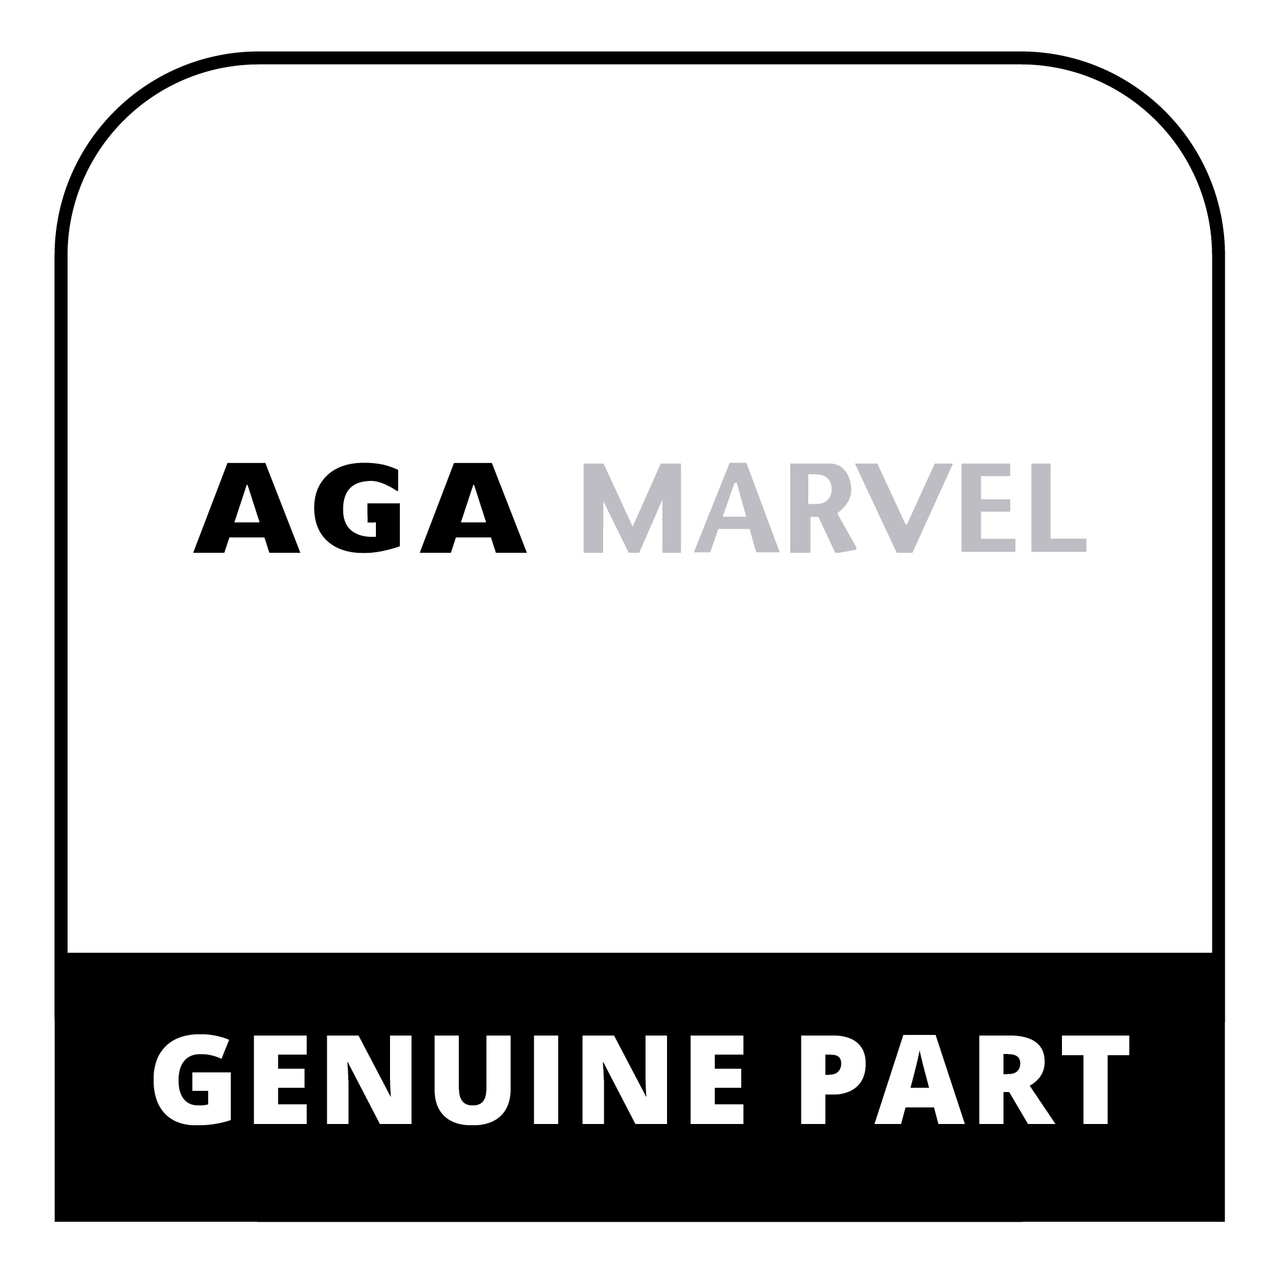 AGA Marvel FS4M997286 - B00001Axx- L/Wen Leg Seno B00001Azzse - Genuine AGA Marvel Part